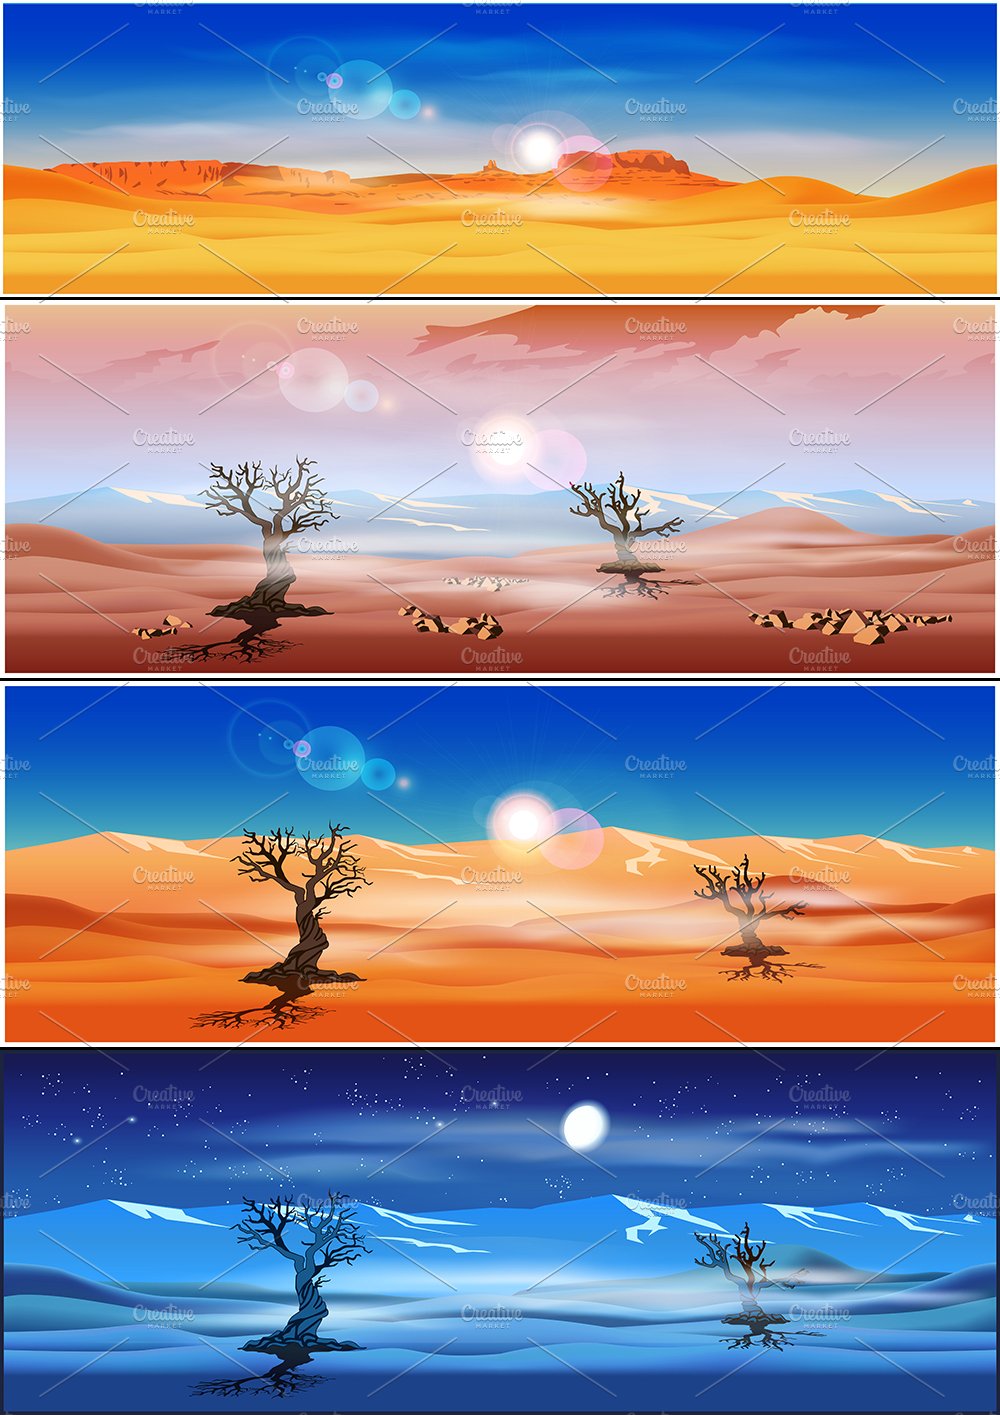 Seamless Desert Landscapes cover image.